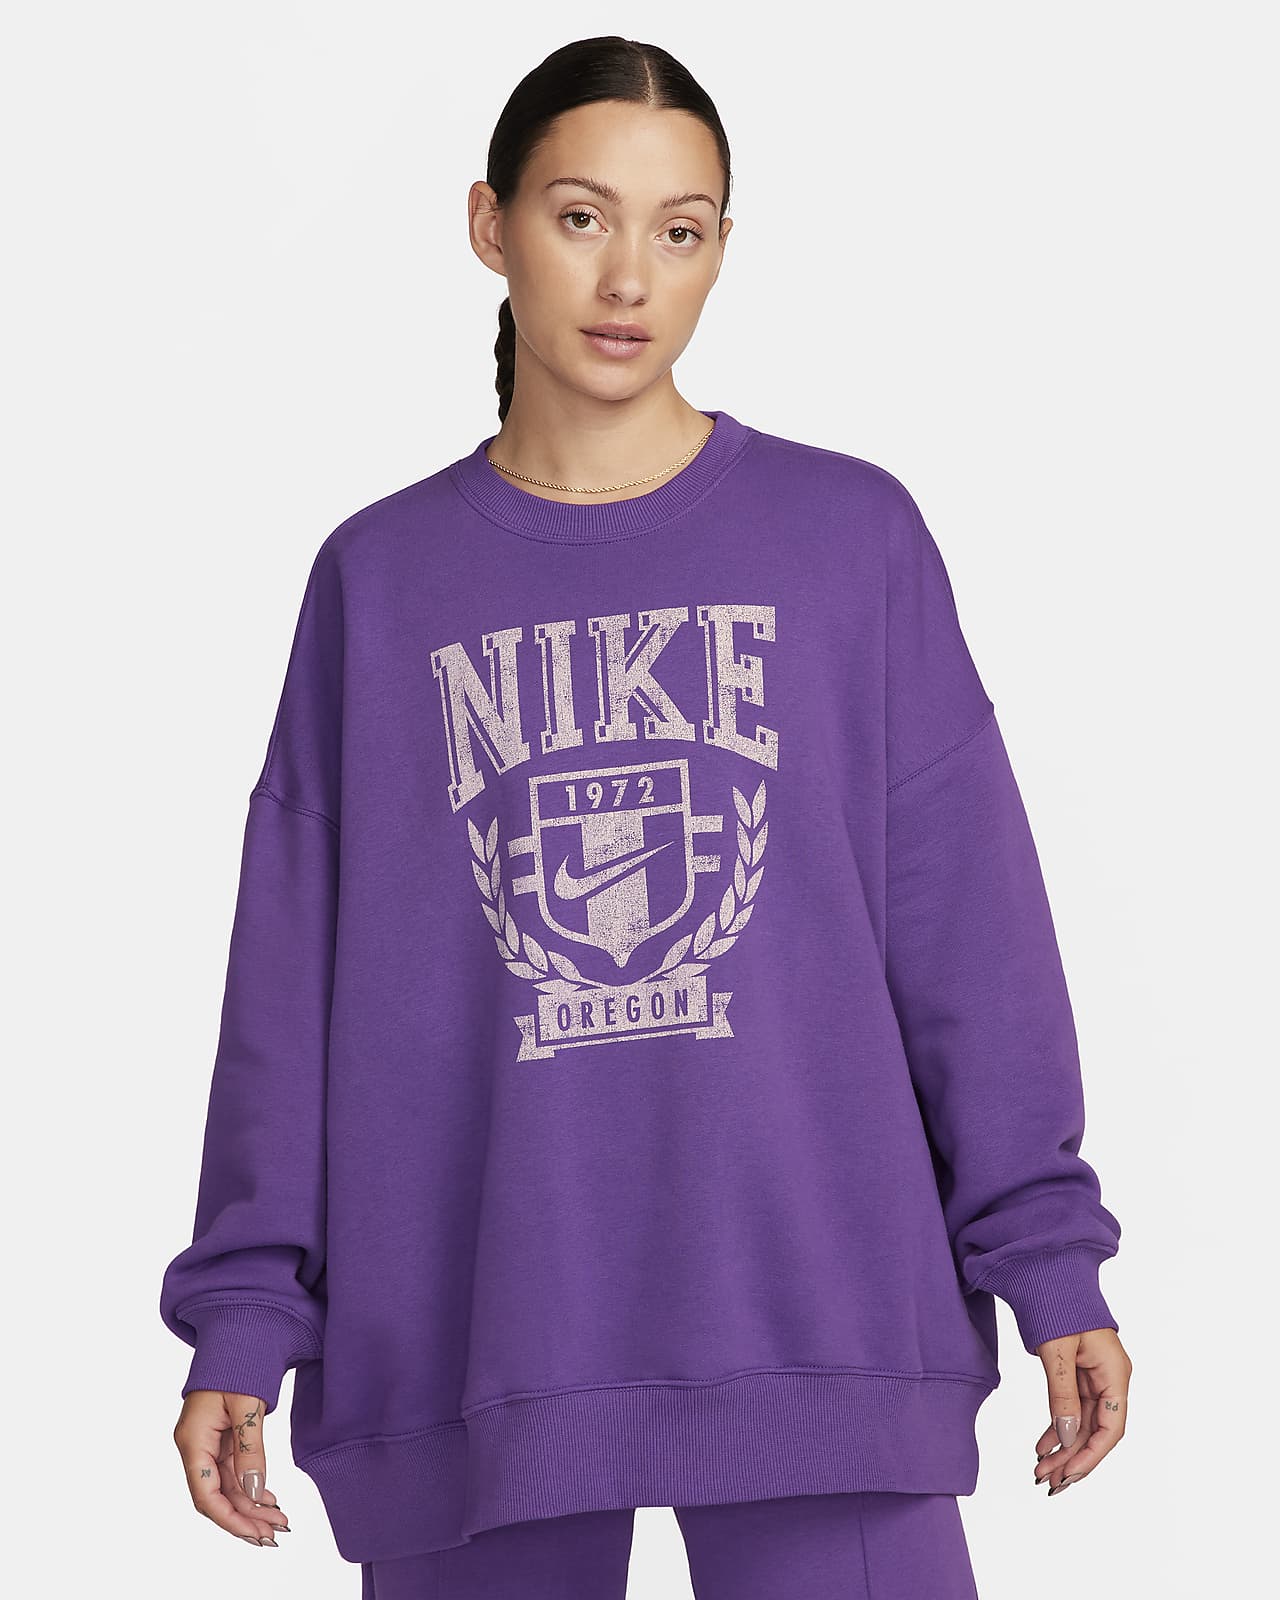 Nike Sportswear ekstra stor sweatshirt med rund hals i fleece til dame